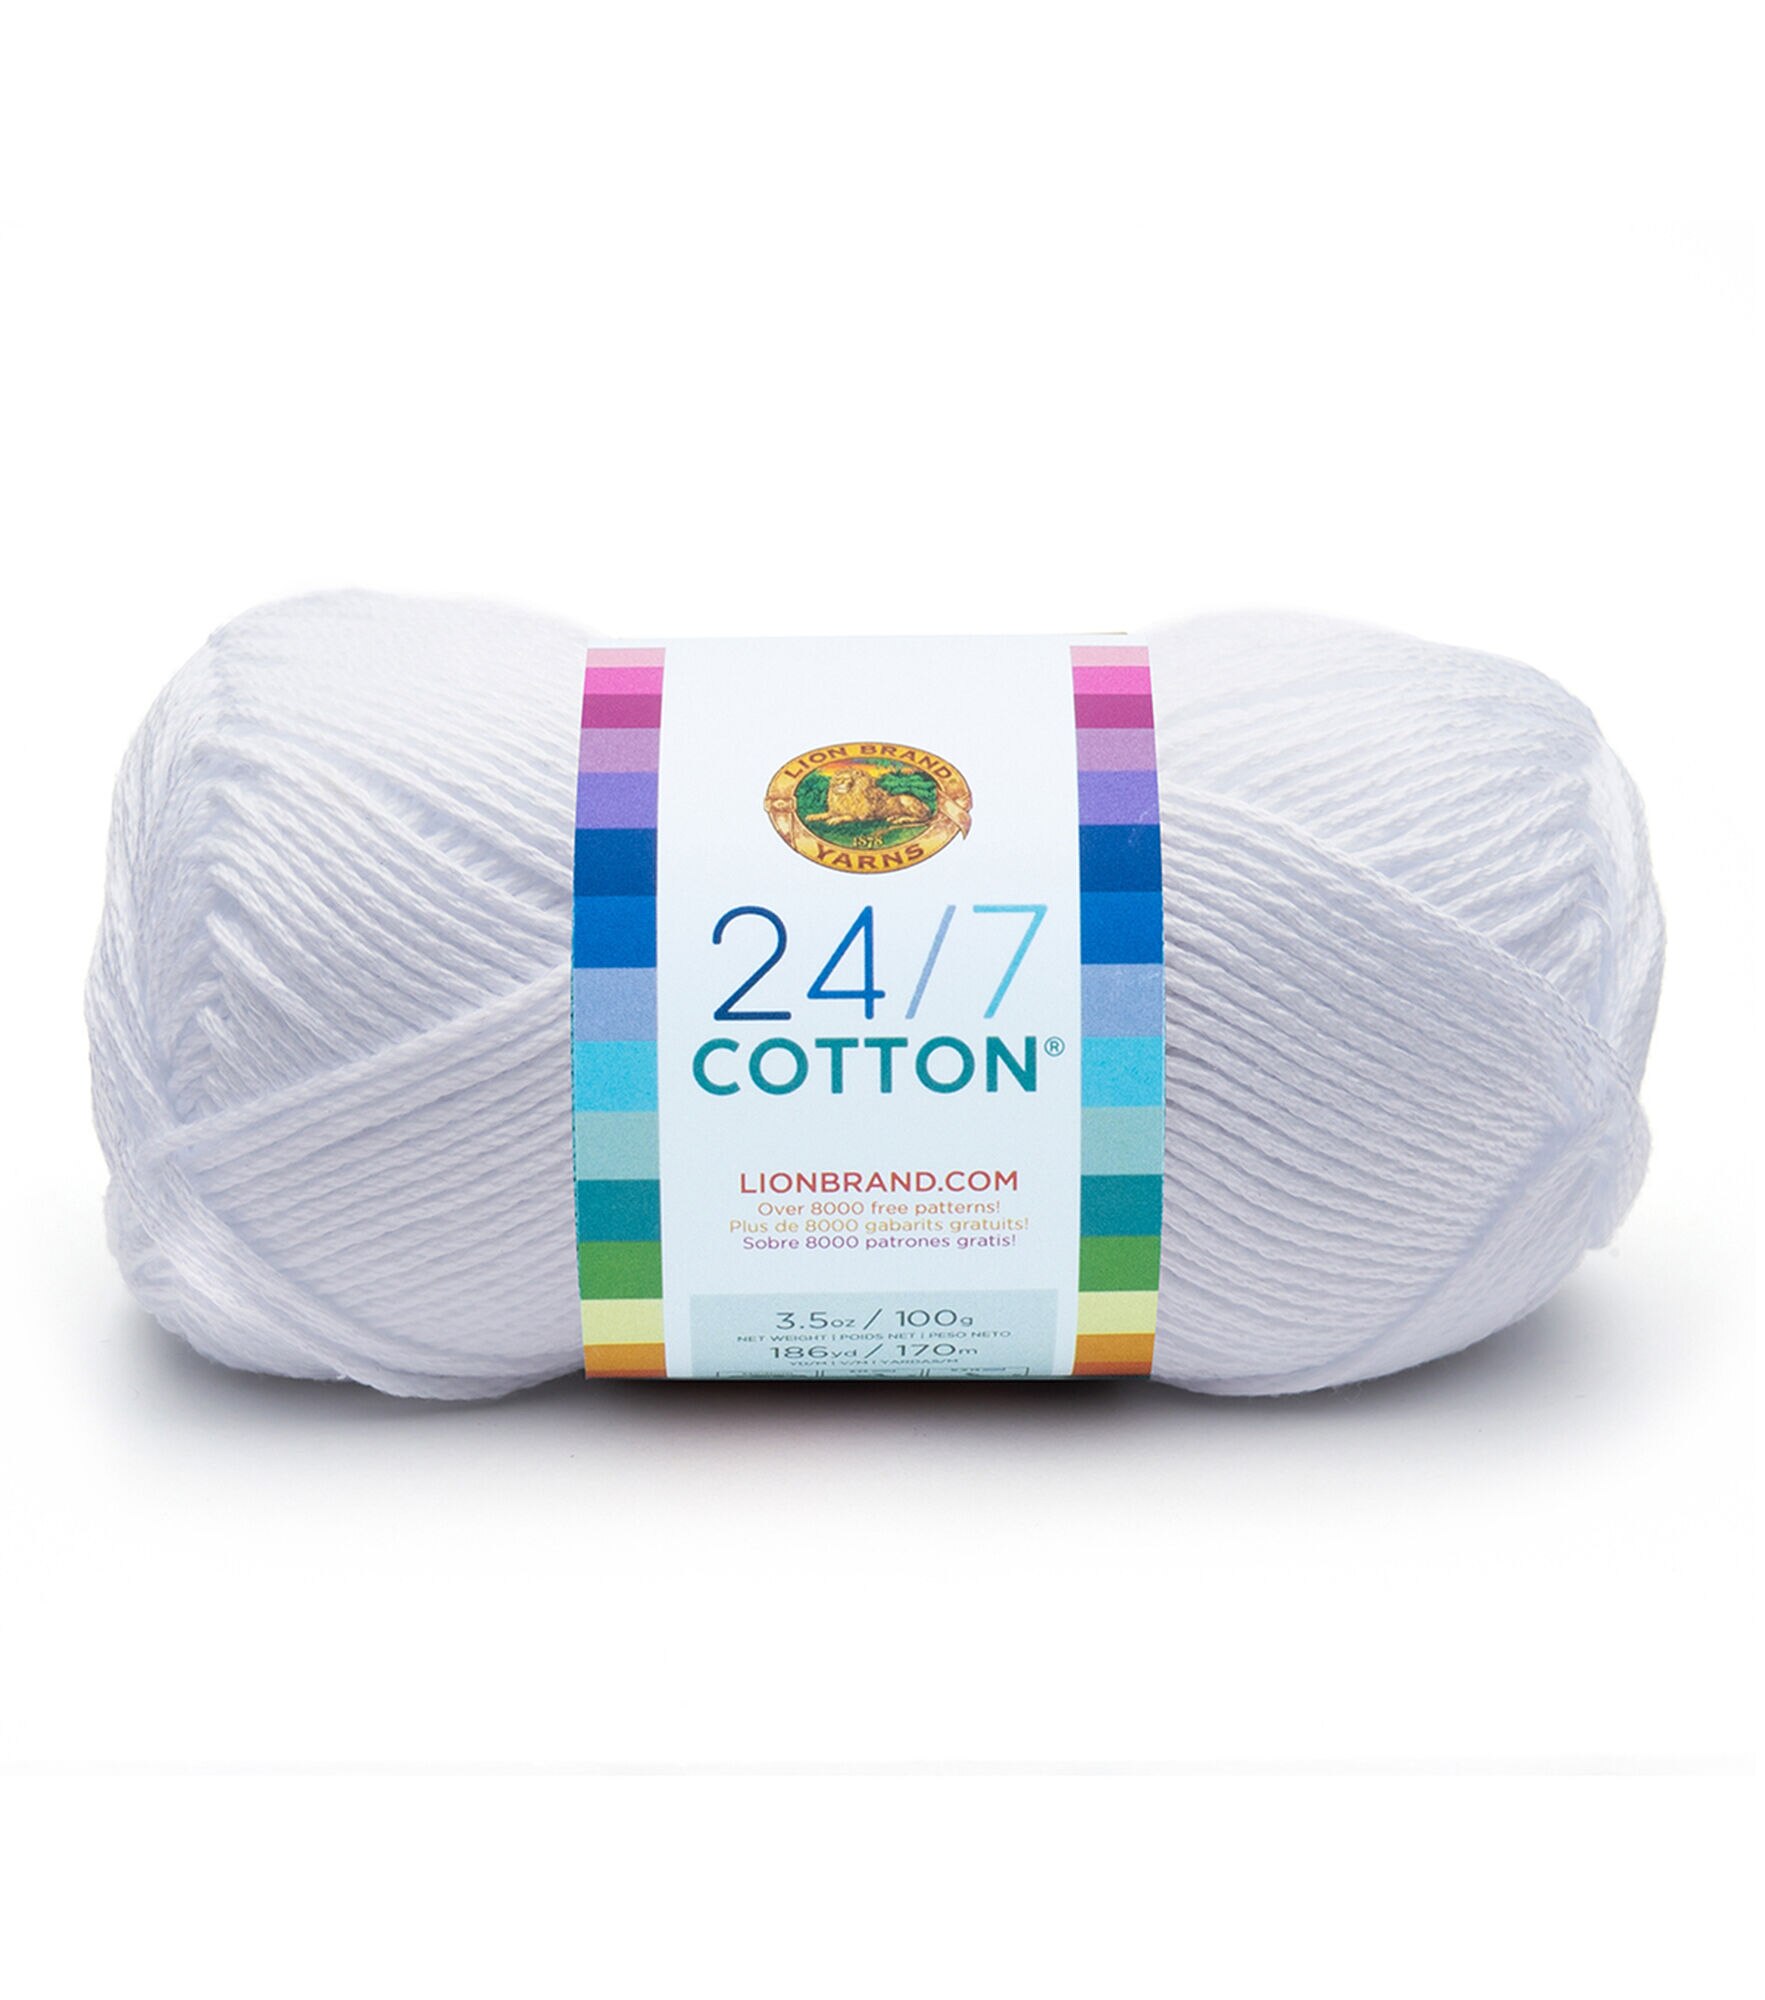 colored bird Size 3 Classic Crochet Thread Cotton Crochet Yarn 100